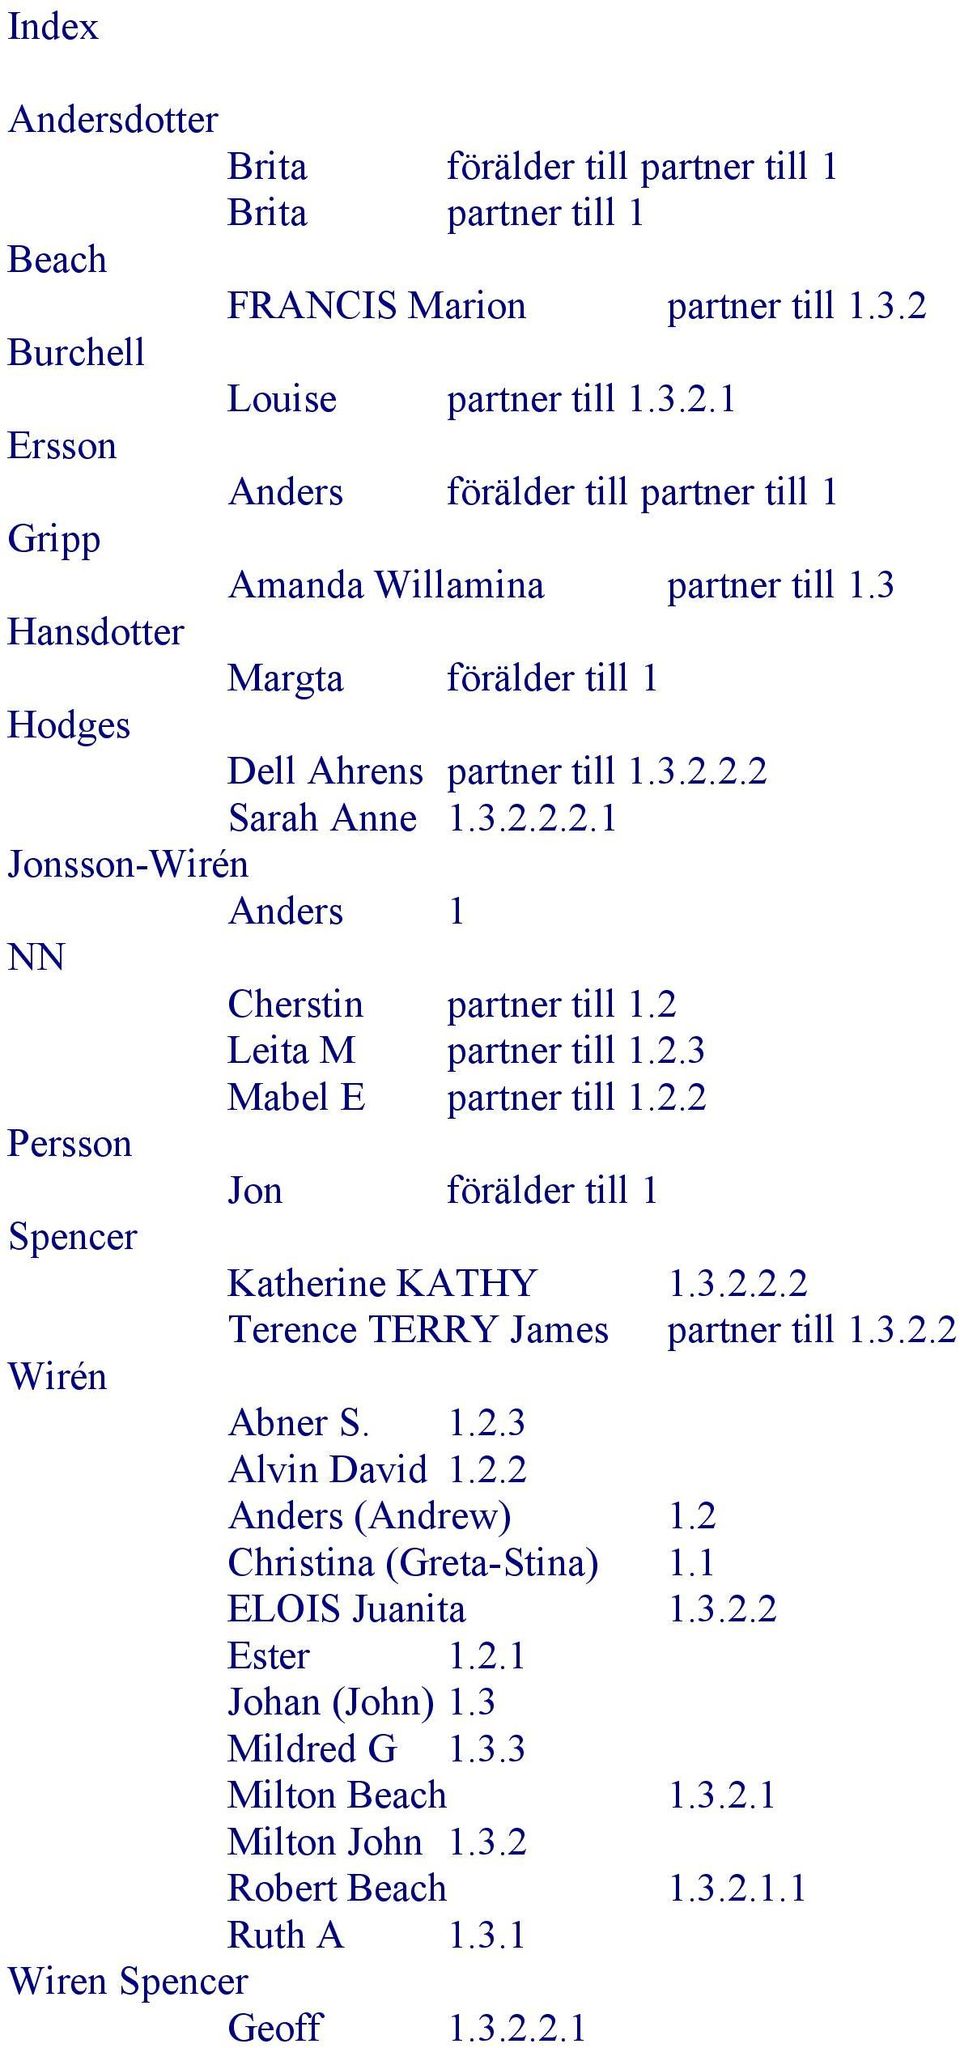 2.2 Persson Jon förälder till 1 Spencer Katherine KATHY 1.3.2.2.2 Terence TERRY James partner till 1.3.2.2 Wirén Abner S. 1.2.3 Alvin David 1.2.2 Anders (Andrew) 1.2 Christina (Greta-Stina) 1.